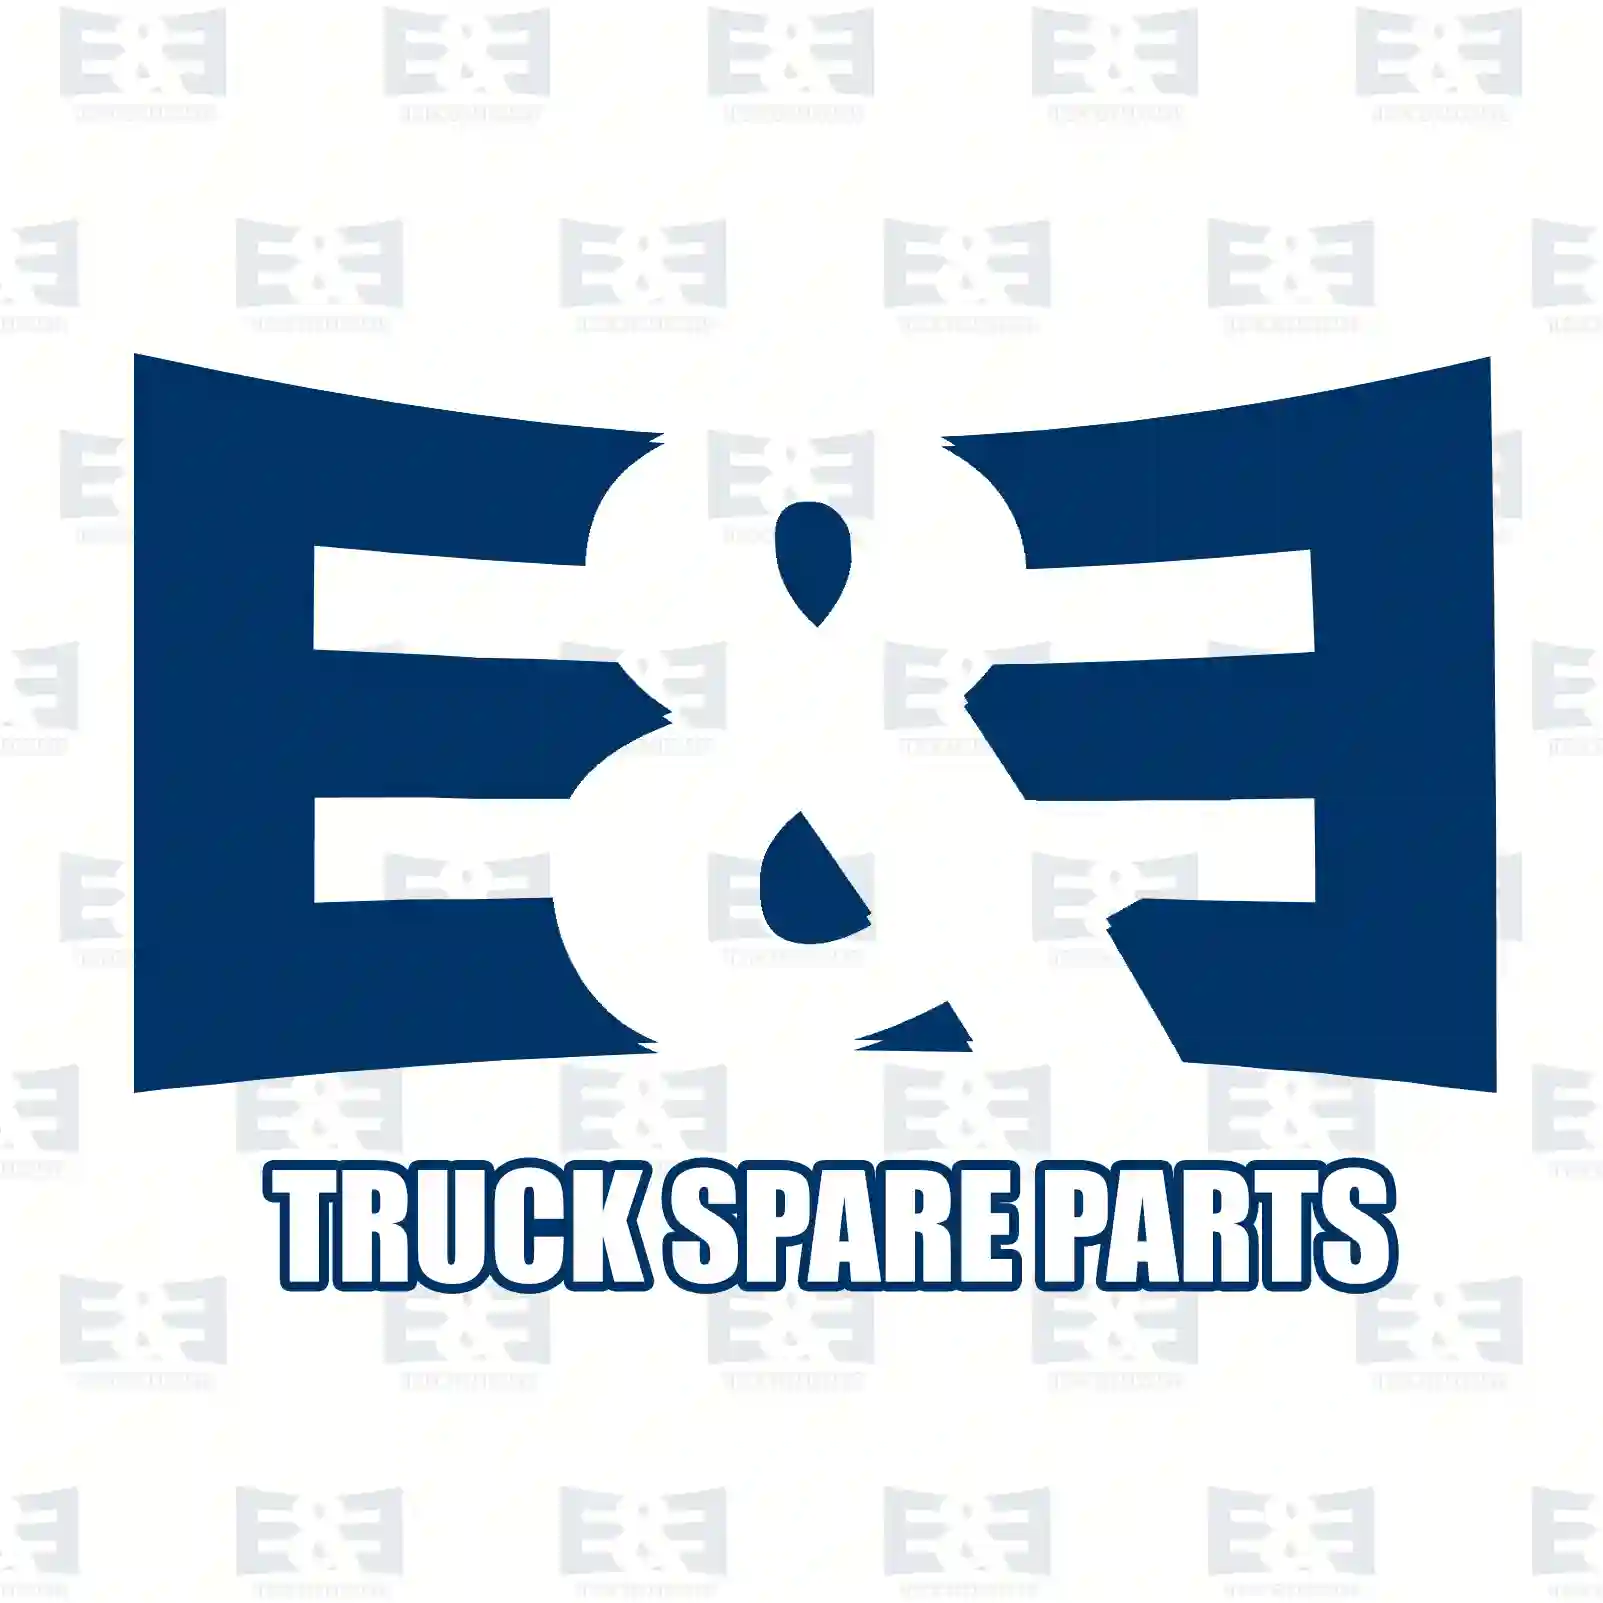 Condenser Condenser, EE No 2E2275748 ,  oem no:1343785080, 1361235080, 1371427080, 1610115880, 6455EP, 6455HC, 1343785080, 1361235080, 1371427080, 1610115880, 1343785080, 1361235080, 1371427080, 1610115880, 6455EP, 6455HC E&E Truck Spare Parts | Truck Spare Parts, Auotomotive Spare Parts